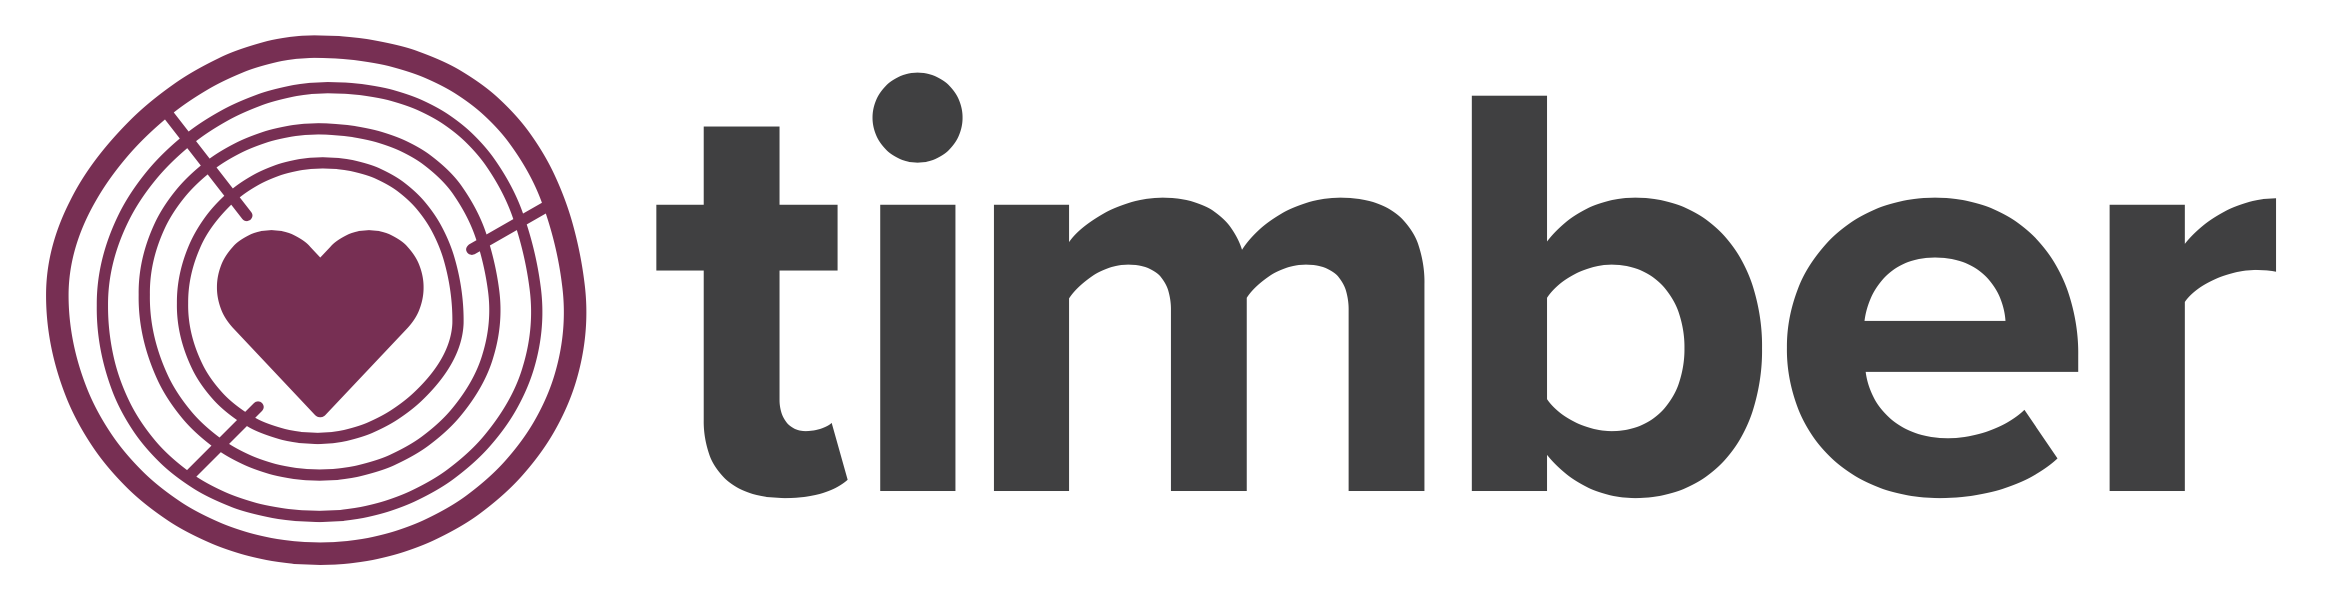 Timber logo